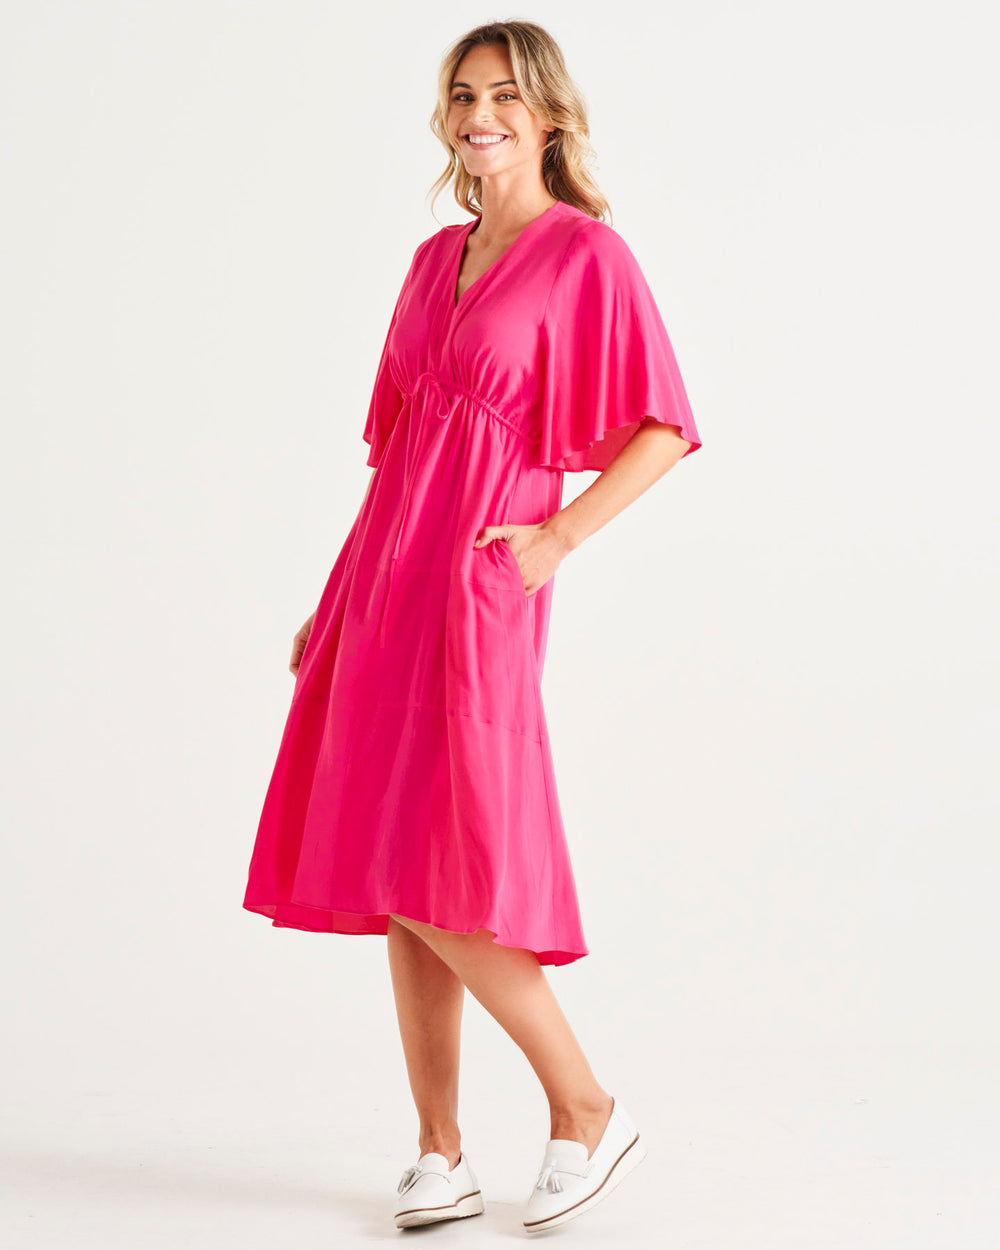 Betty Basics | Comfortable Clothes and Affordable Wardrobe Basics